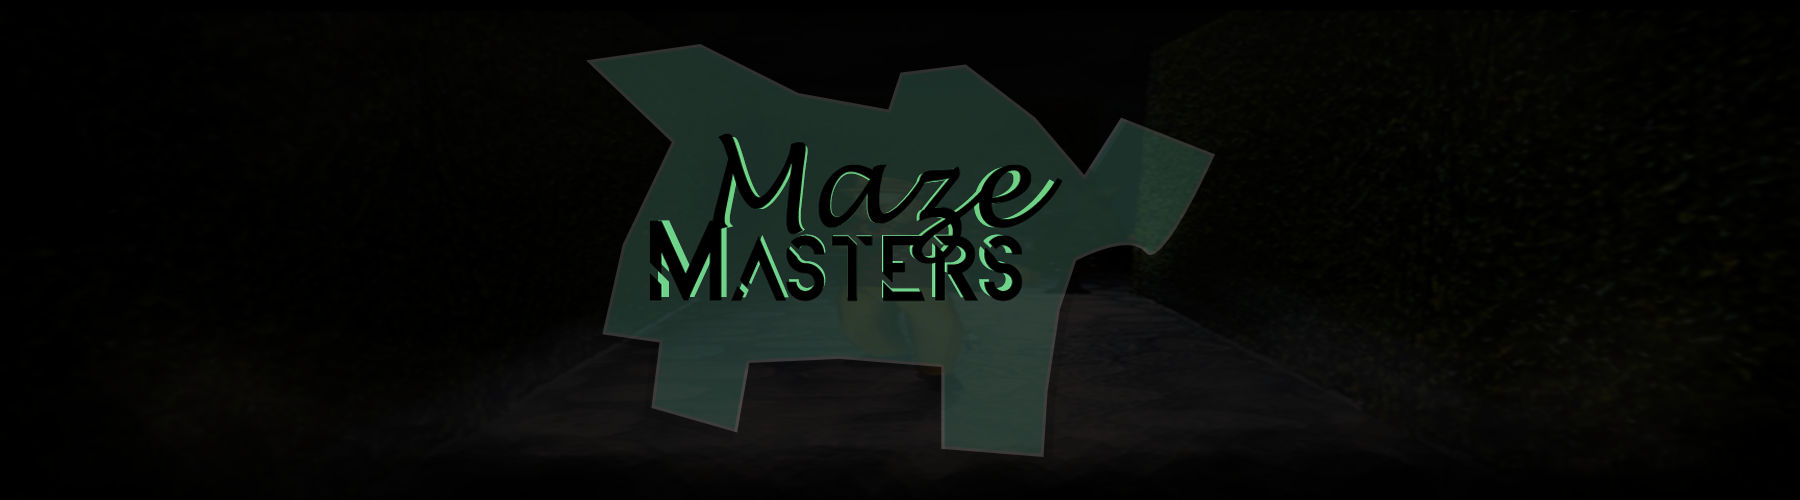 Maze Masters